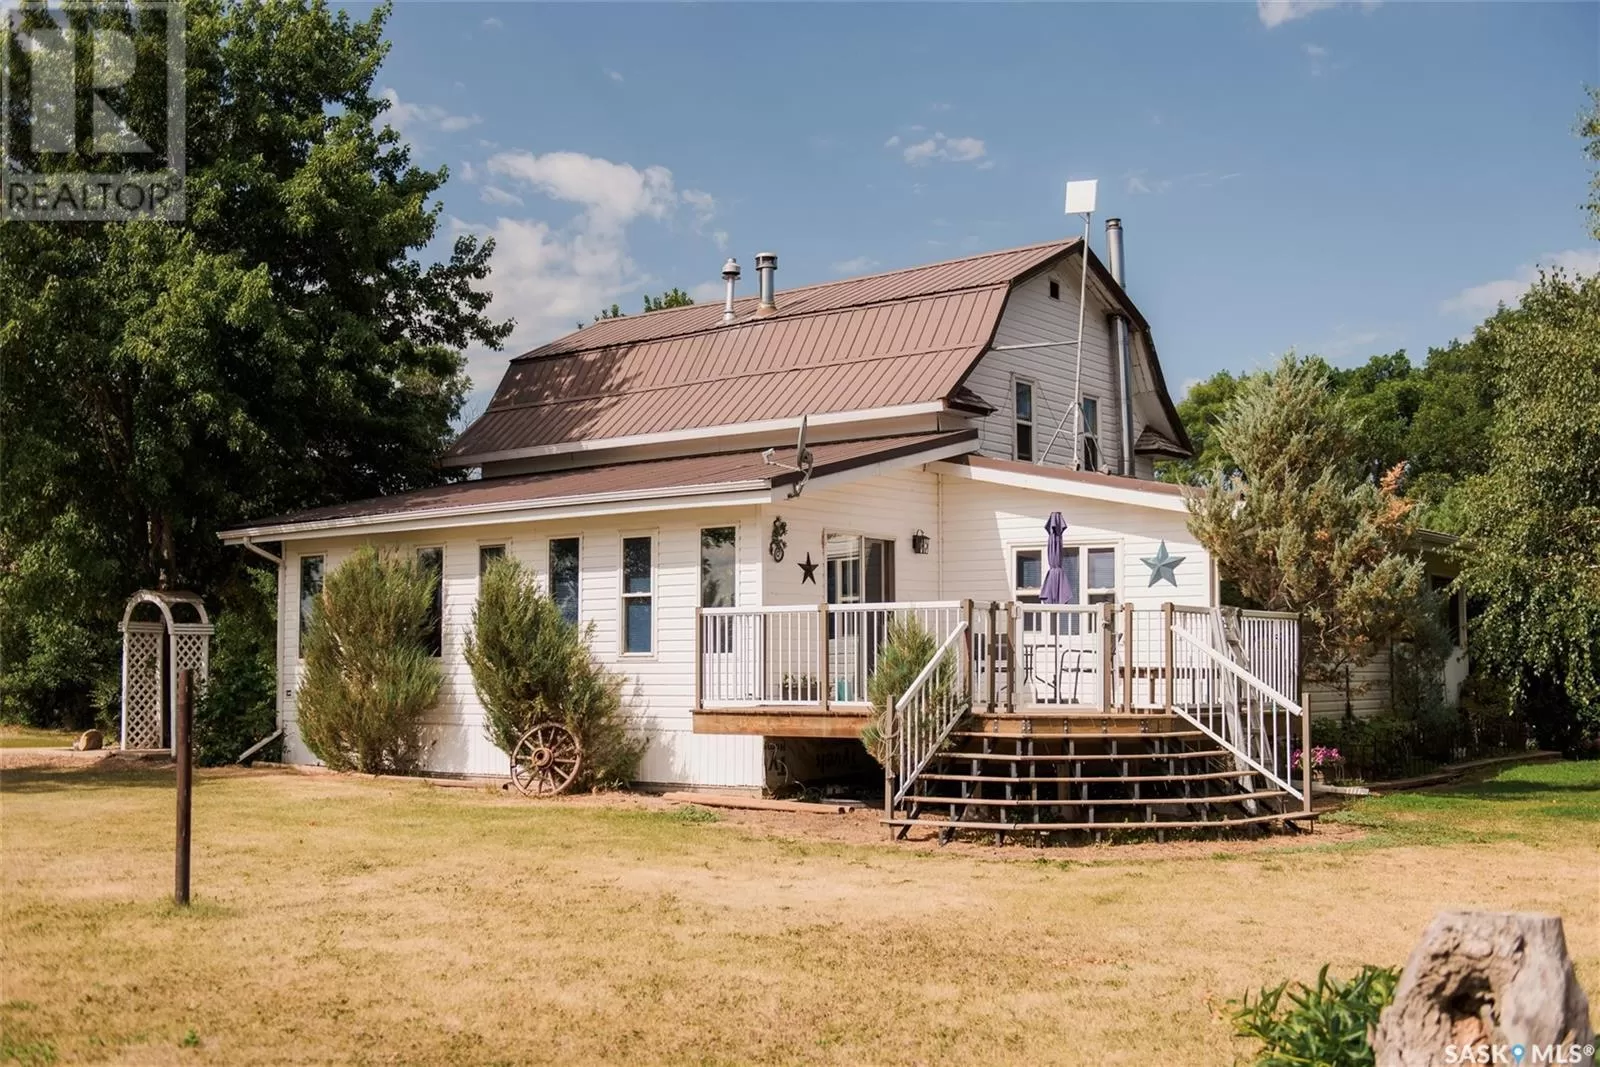 House for rent: Brokenshell Acreage - 77 Acre Ranch, Brokenshell Rm No. 68, Saskatchewan S0C 2G0